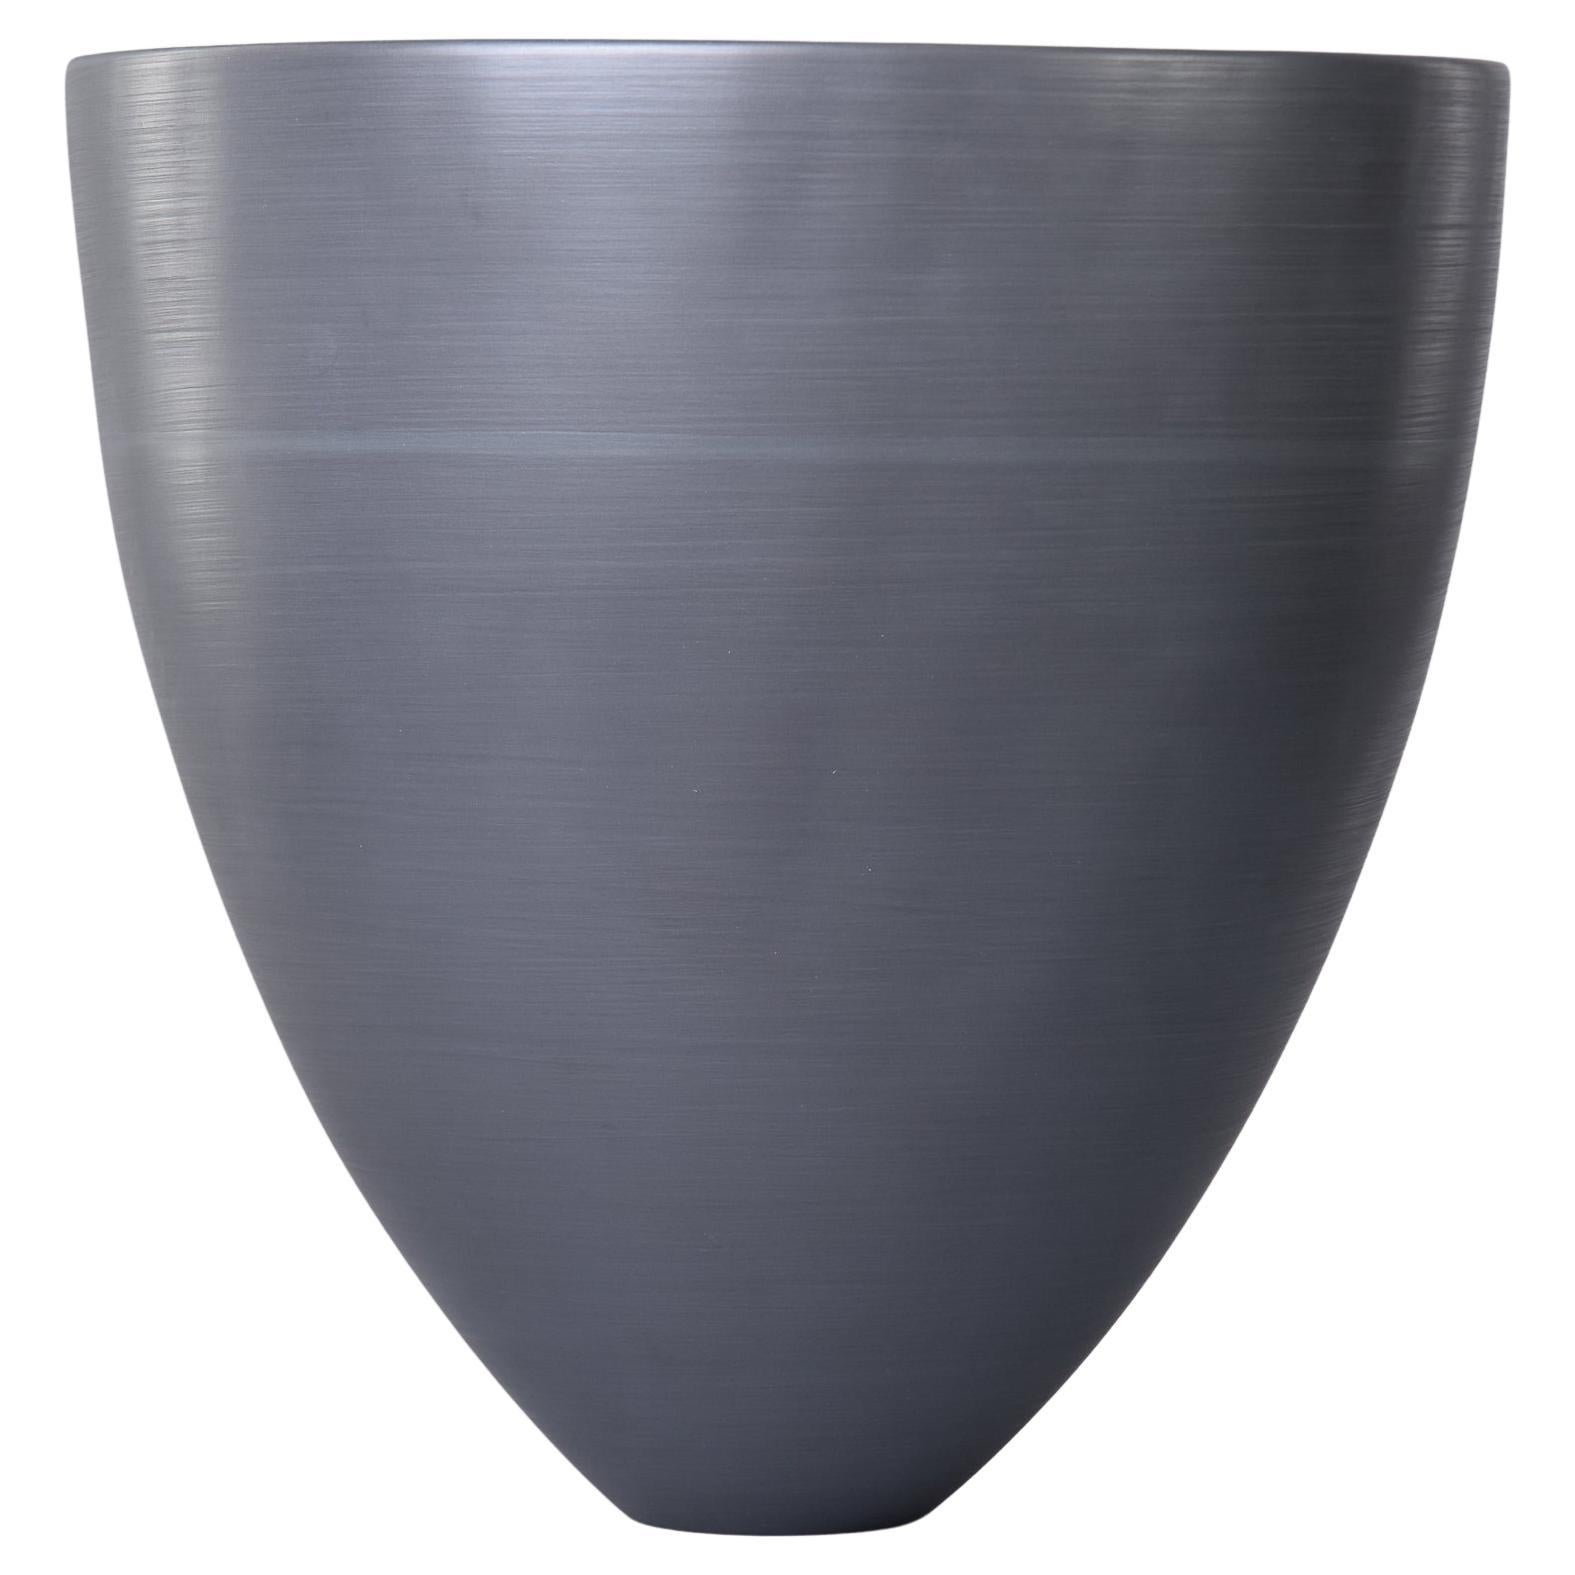 Nouveau bol ou vase en forme de coupe en graphite Rina Menardi